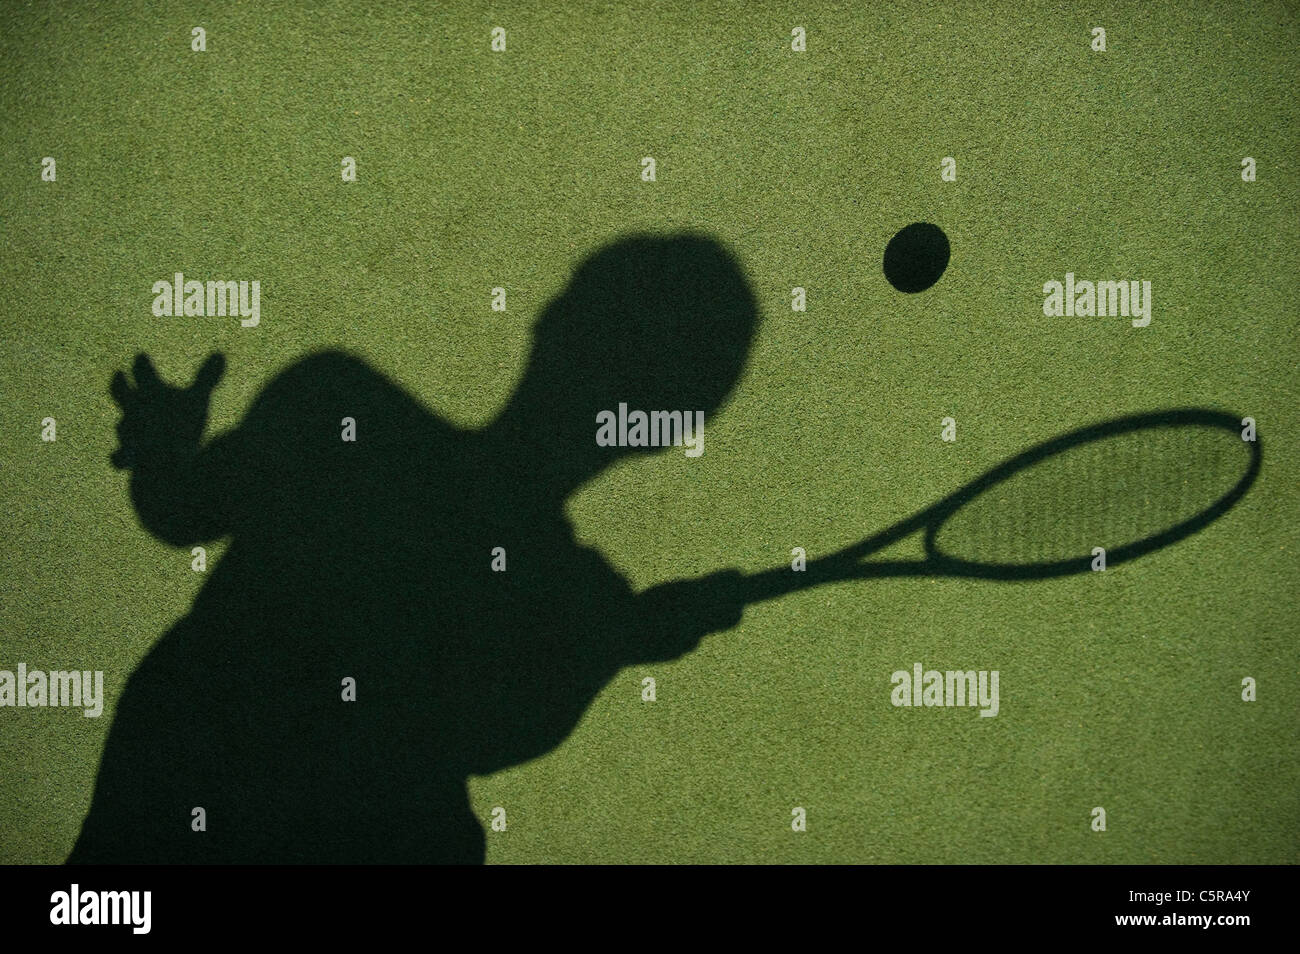 La sombra de un jugador de tenis en la cancha. Foto de stock